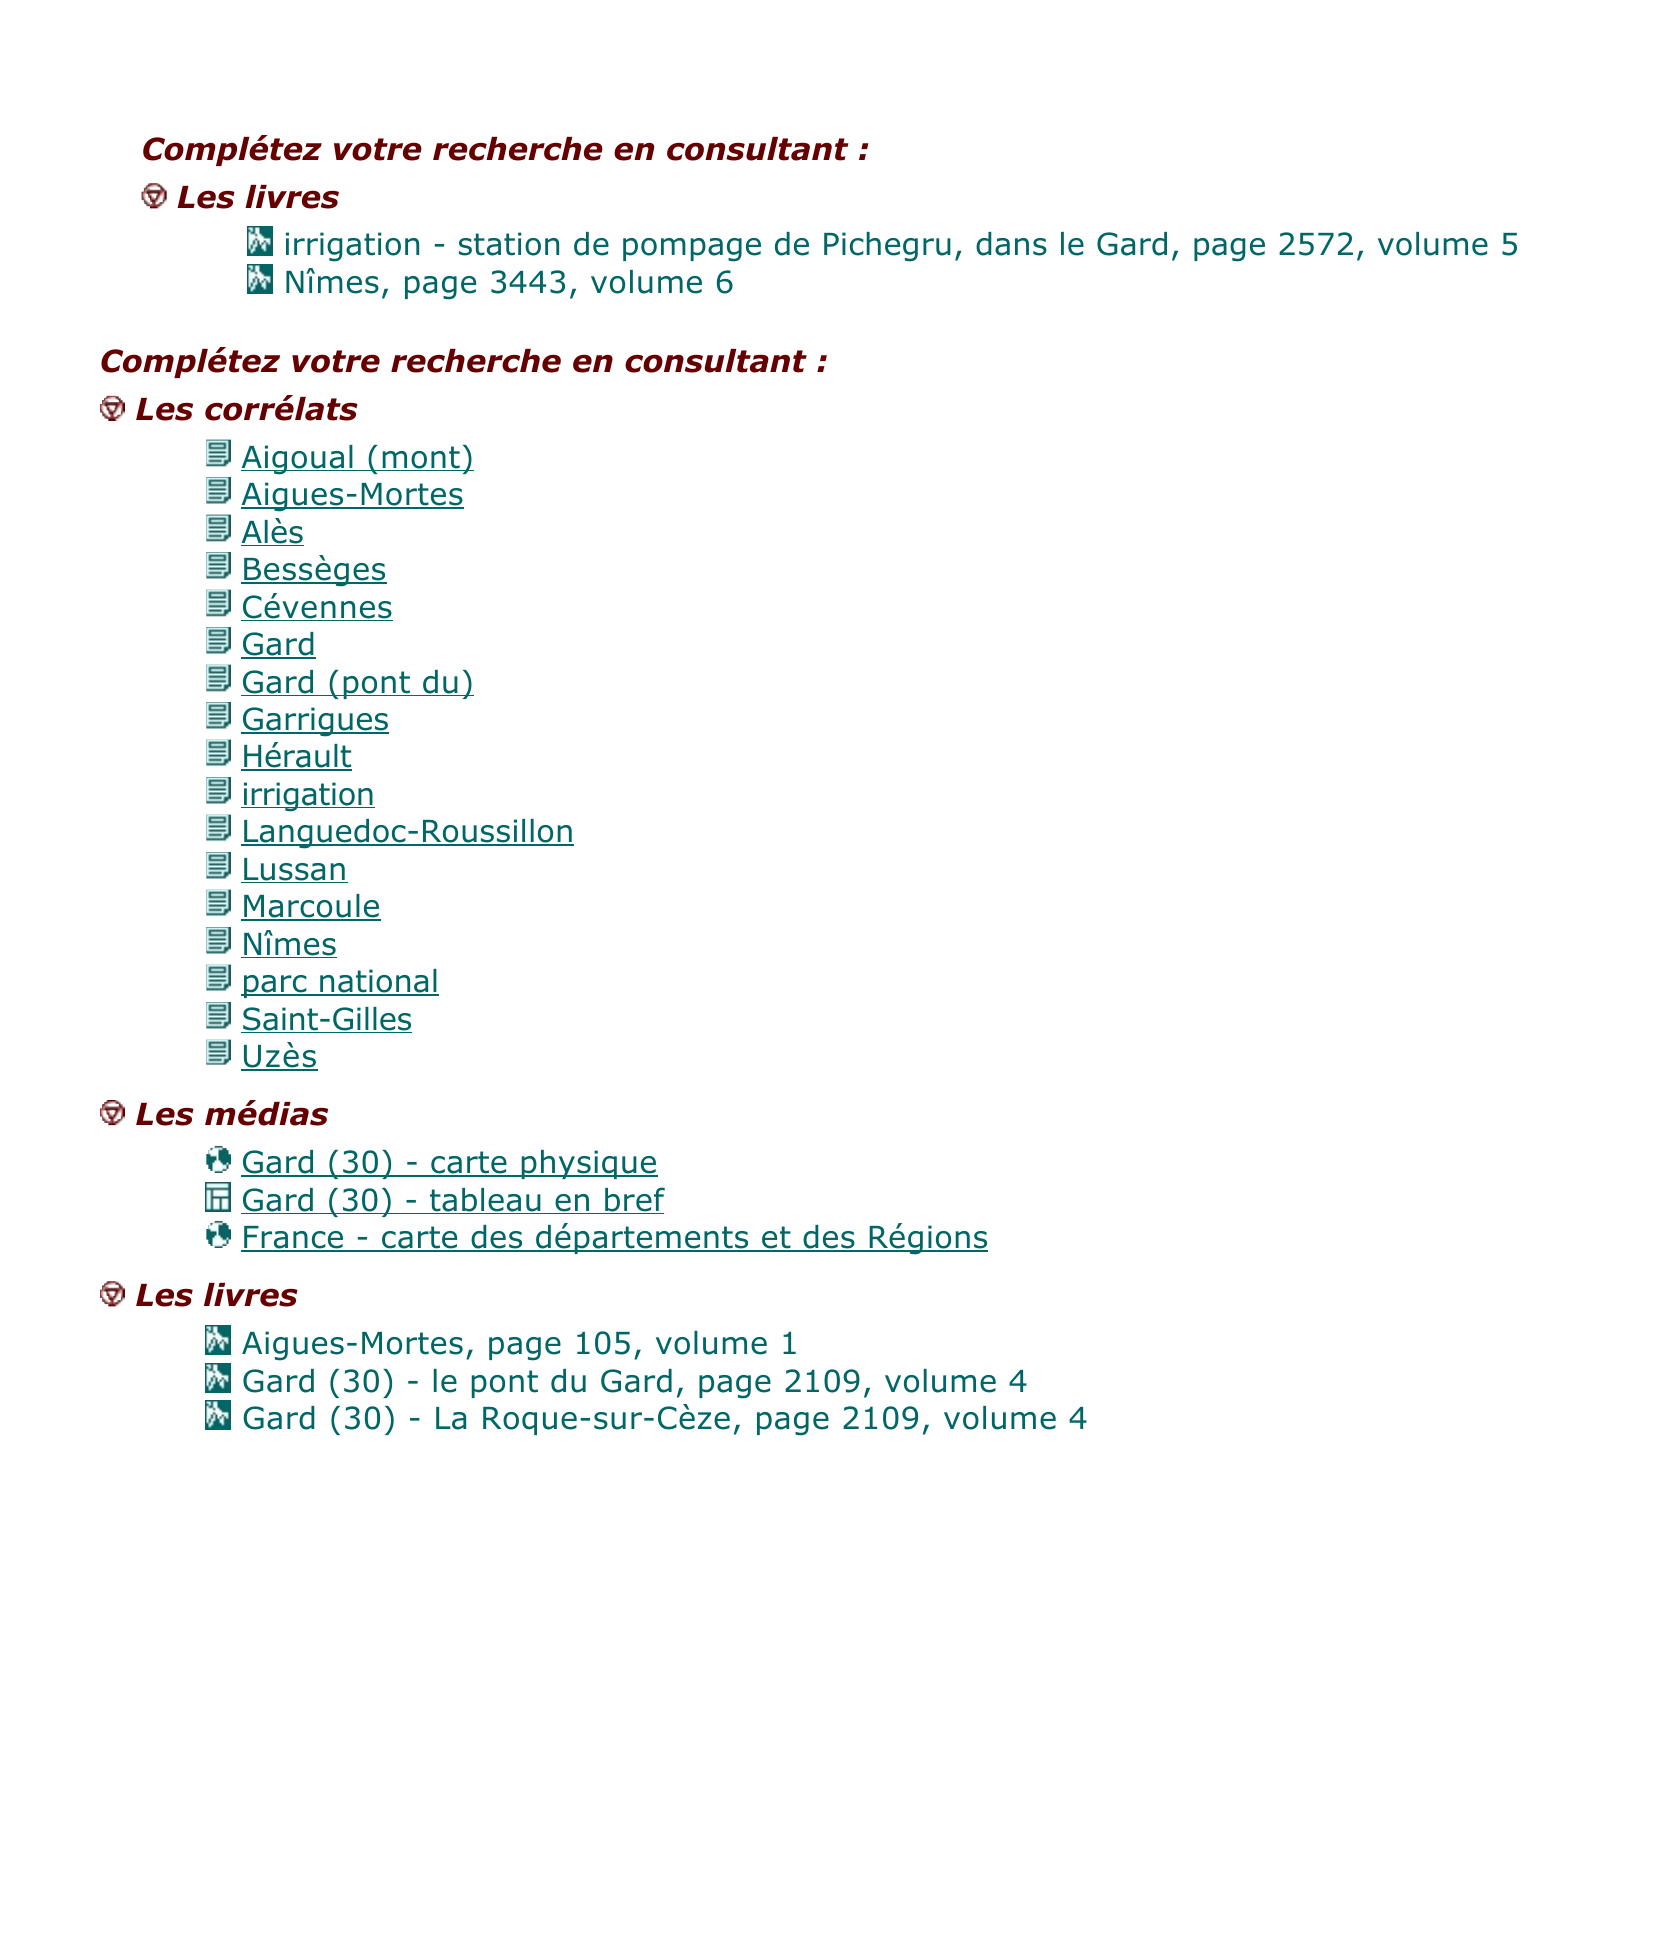 Prévisualisation du document Gard (30).